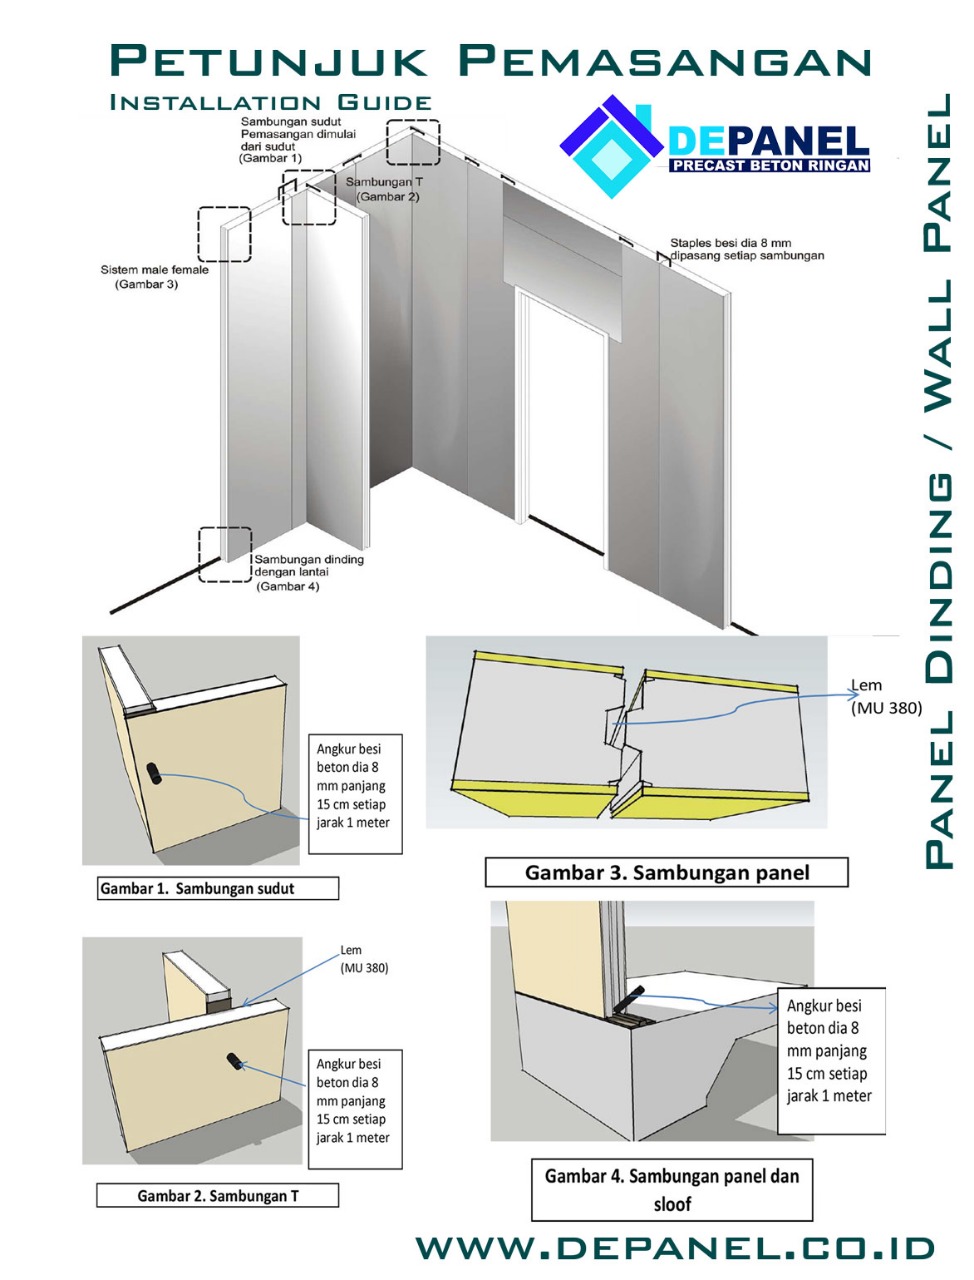 Cara Pemasangan Panel Wall Dan Panel Floor - Depanel Center